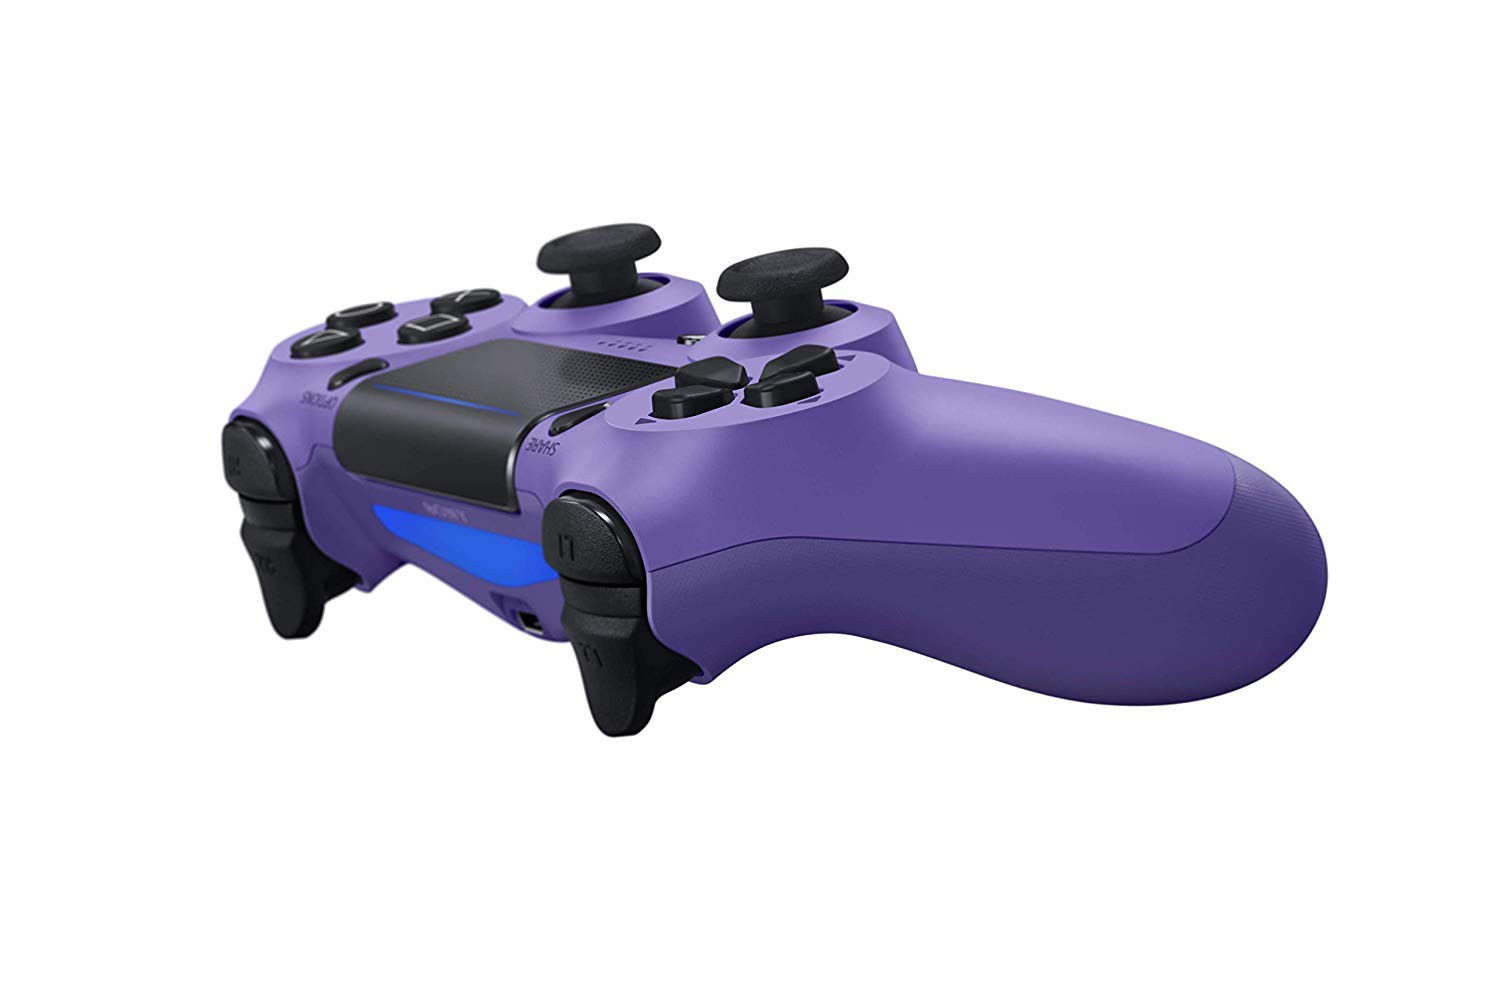 Sony PlayStation DualShock 4 V2 Controller - Electric Purple